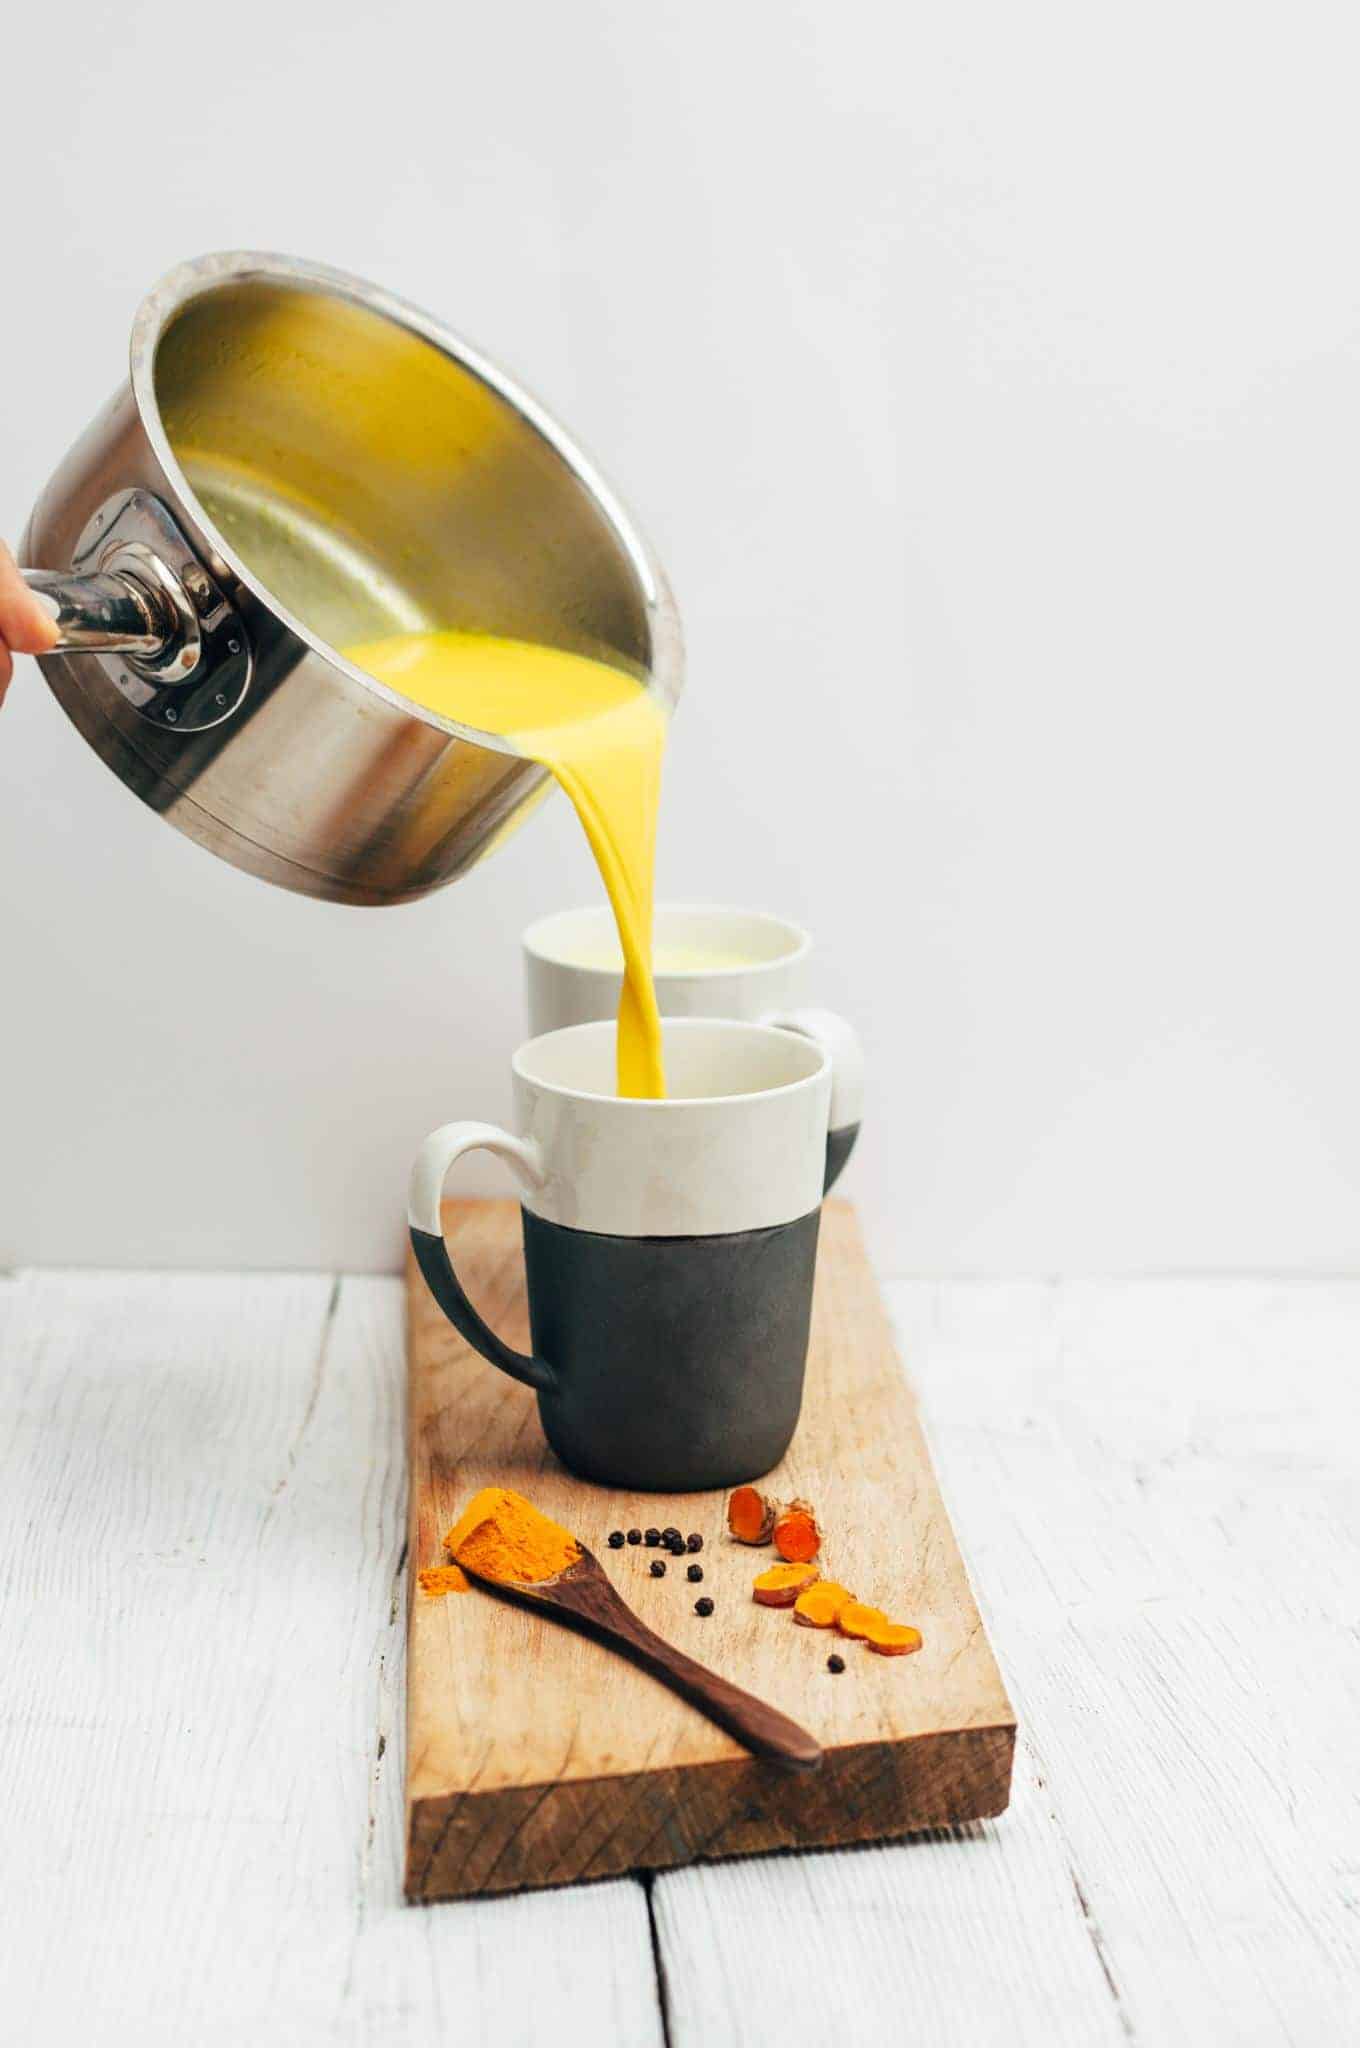 Vegan Golden Milk (5 minutes!) - Turmeric Golden Latte Recipe